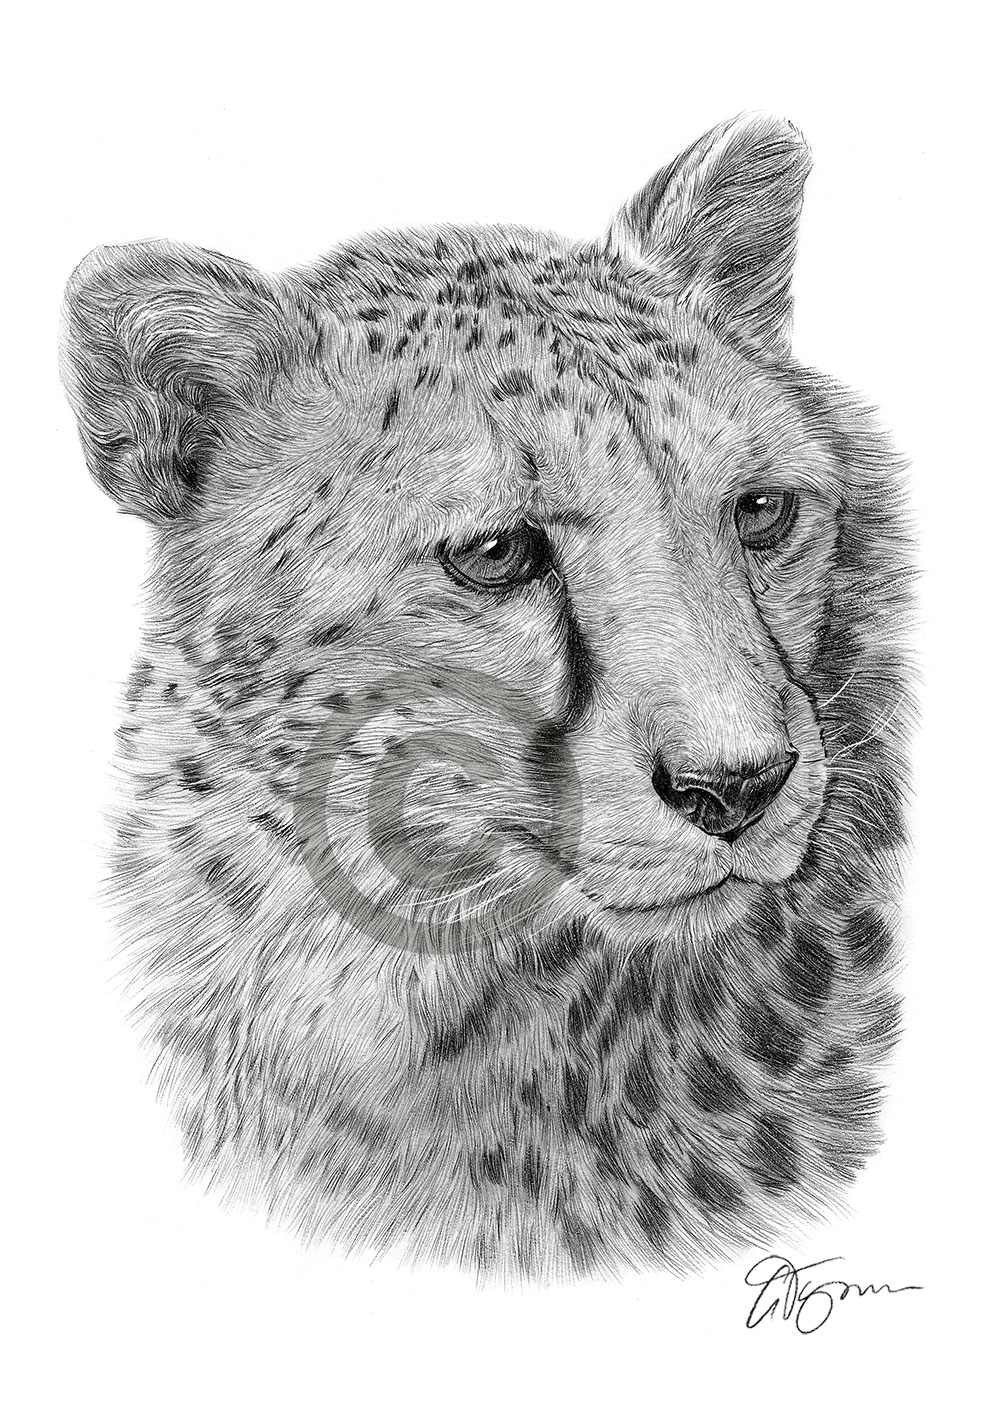 Pencil drawing of a cheetah by artist Gary Tymon